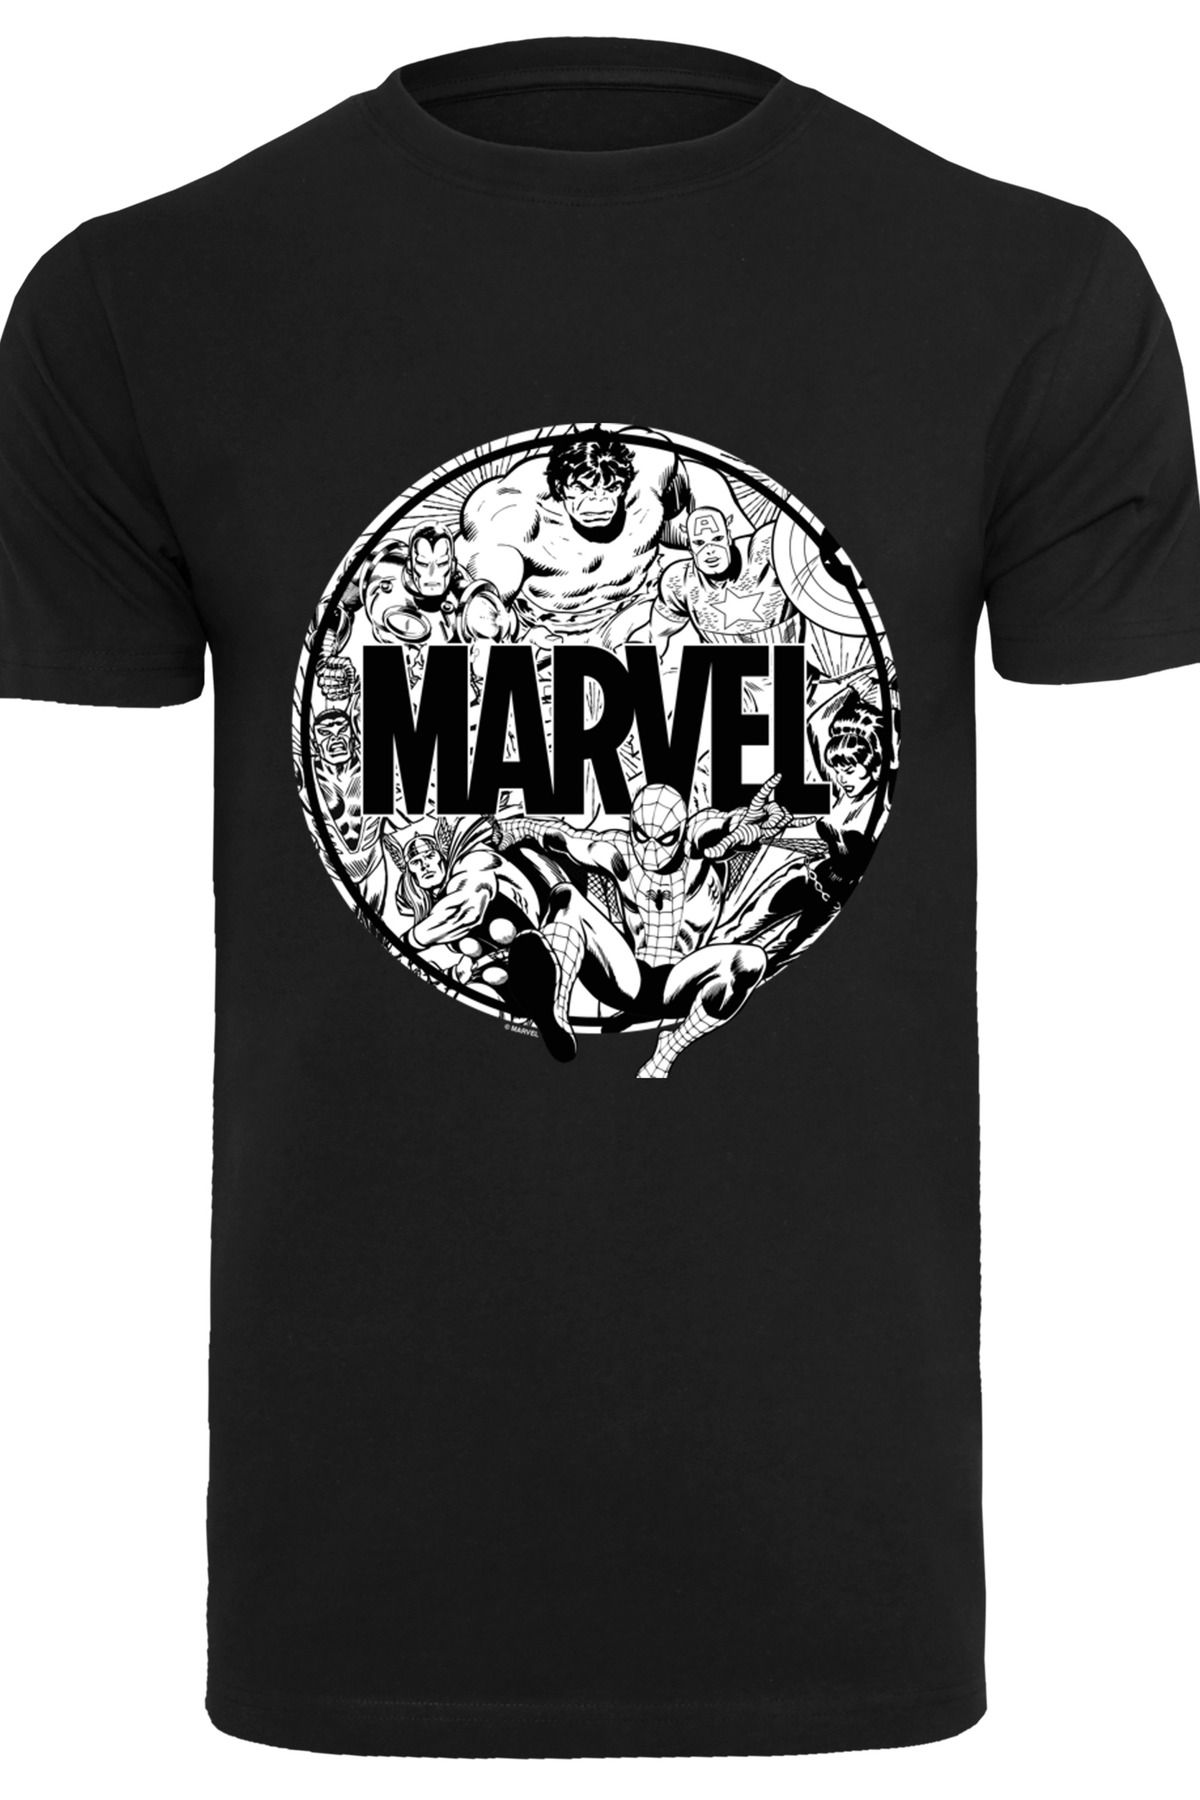 Trendyol - F4NT4STIC Infill Logo Rundhalsausschnitt T-Shirt Comics Herren -BLK Character mit Marvel